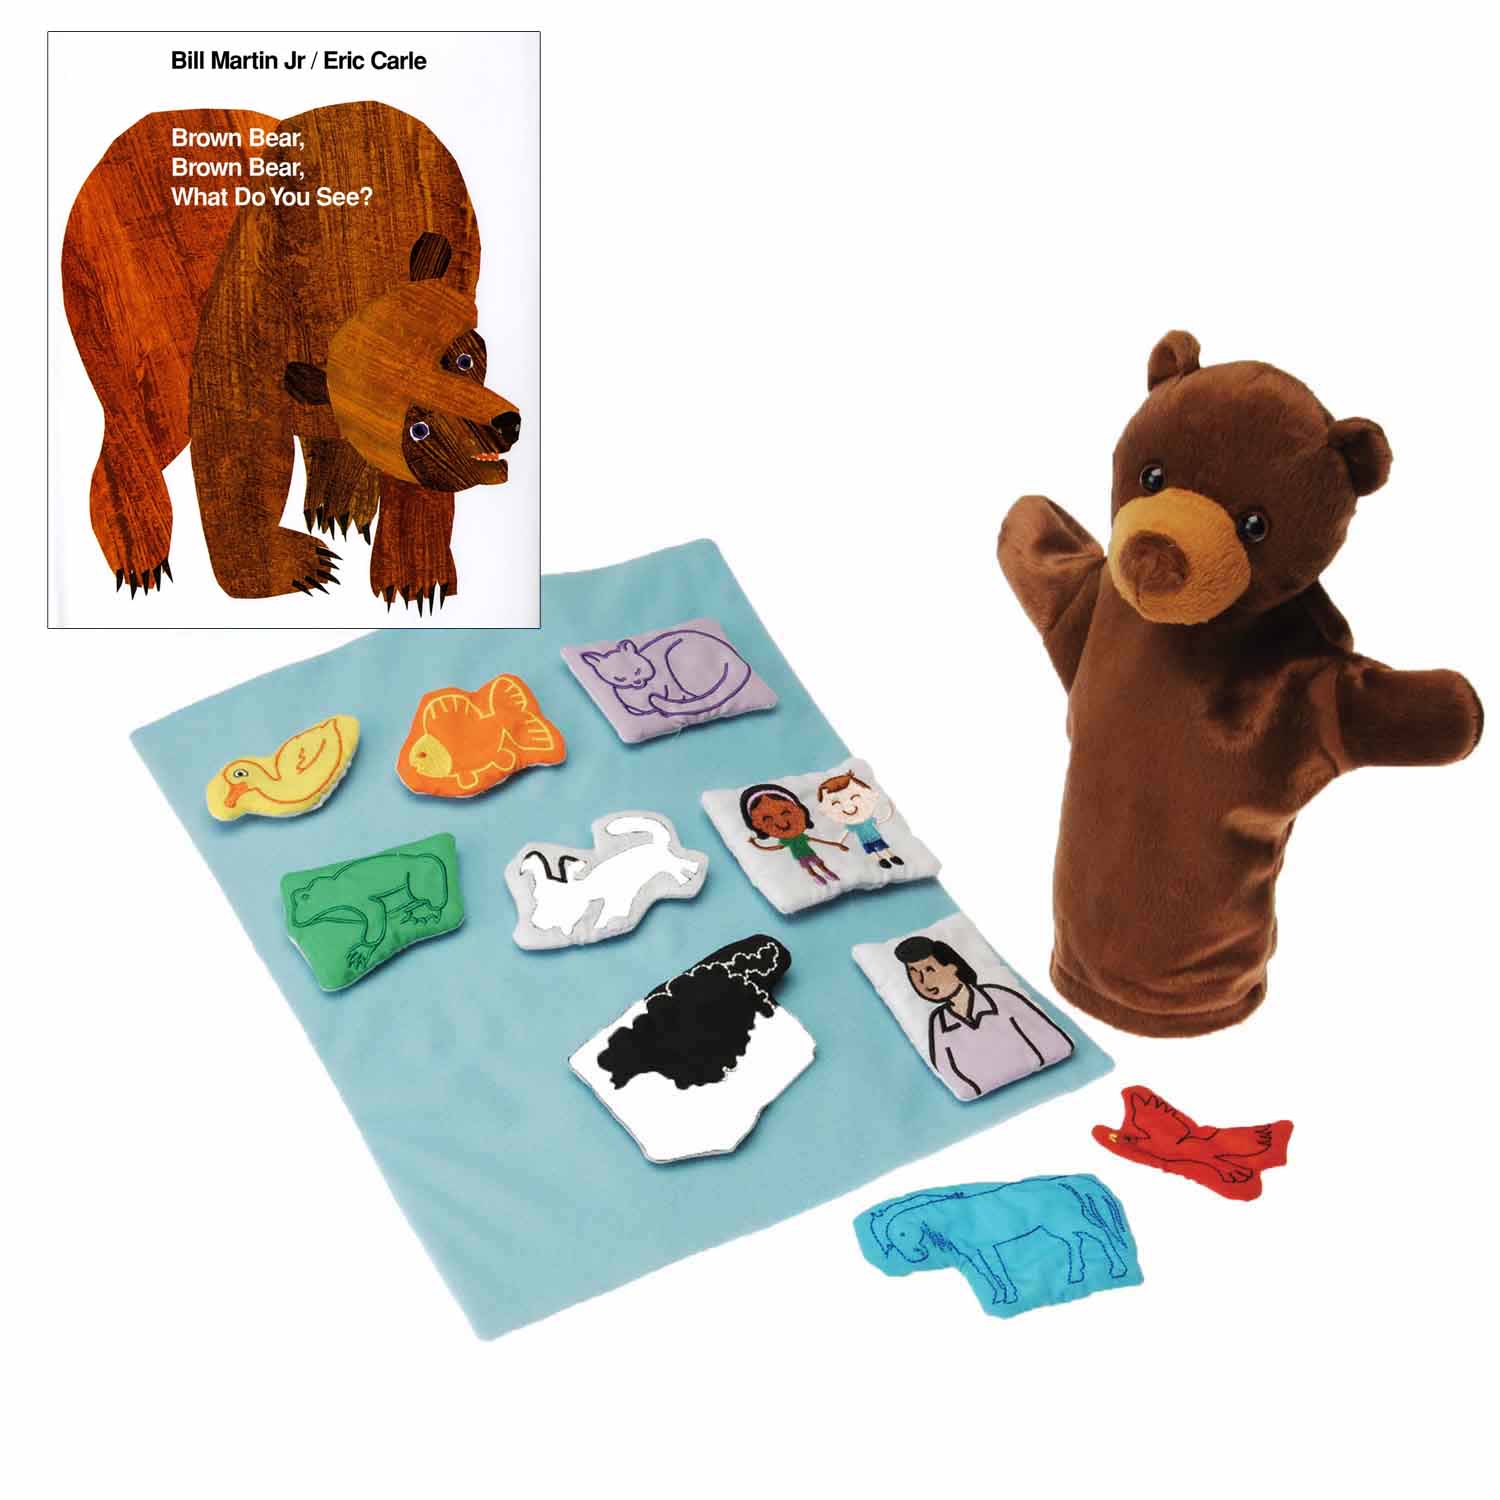 Brown Bear, Brown Bear Book and Props